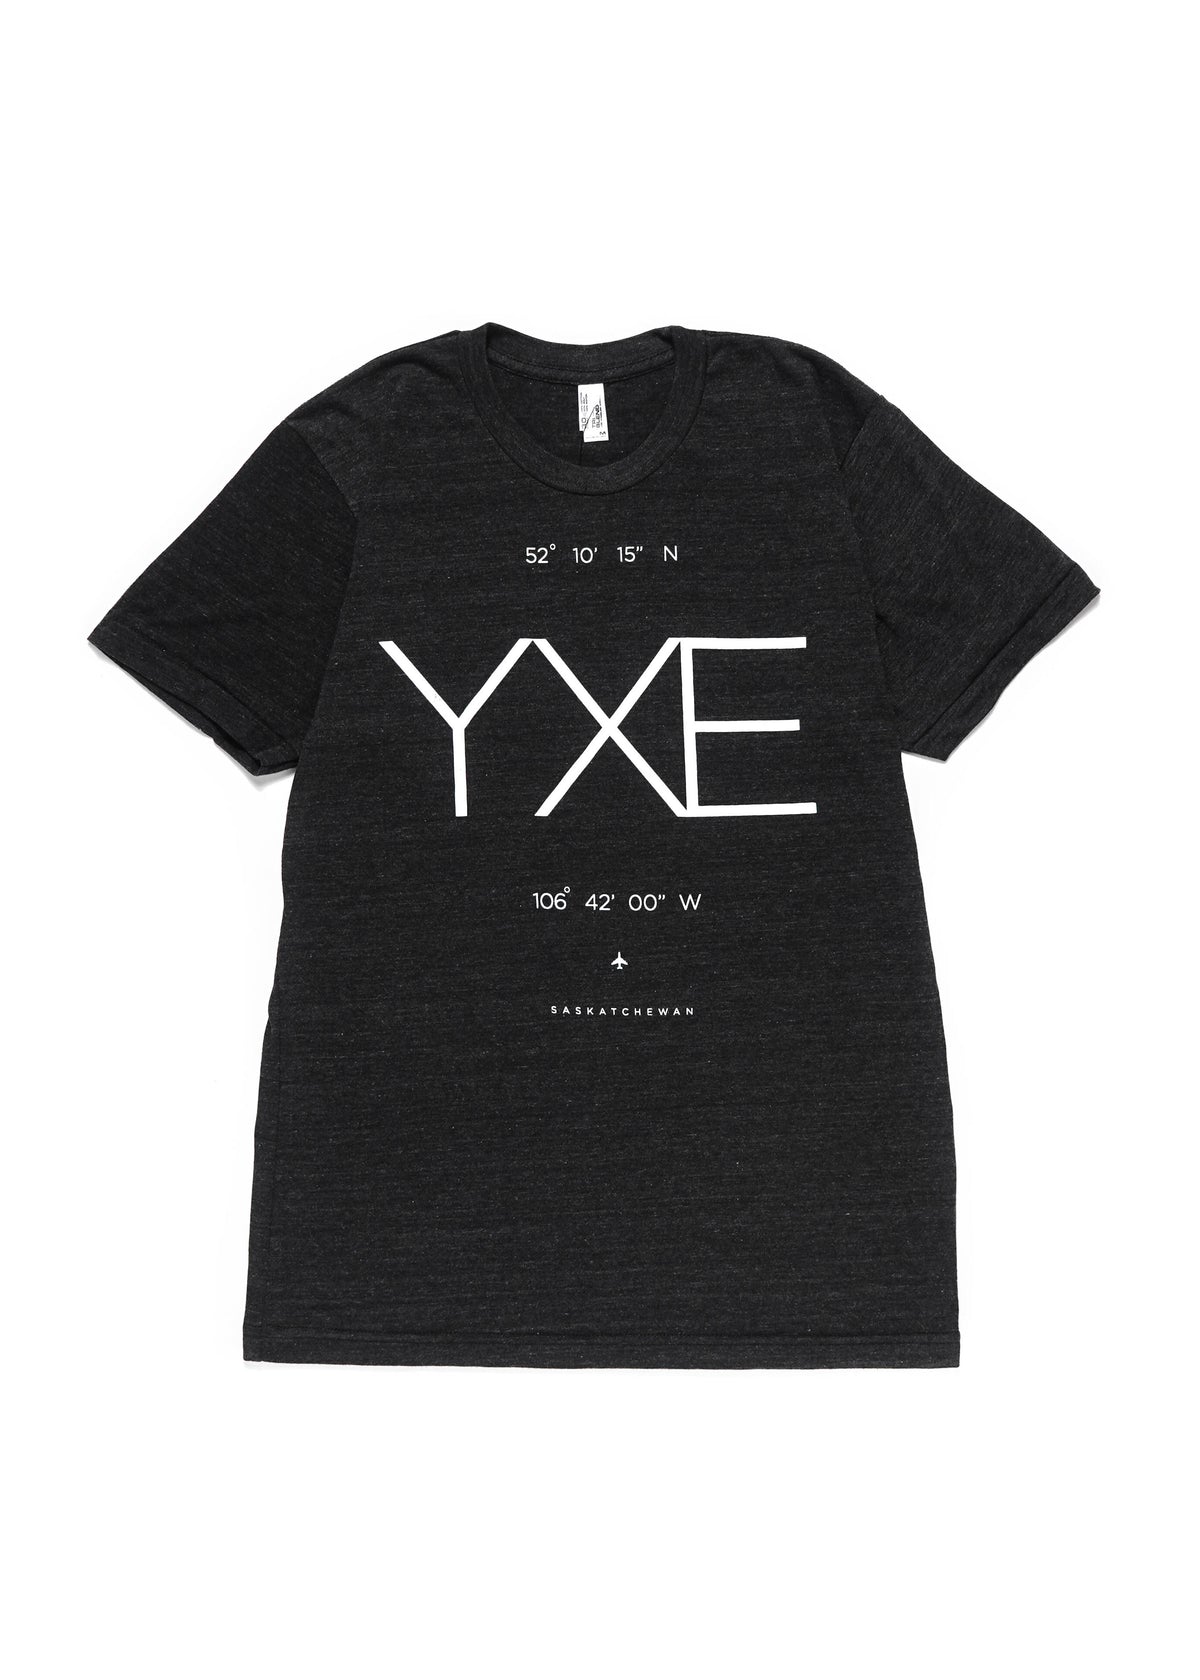 YXE Coordinates Tee | Tri-Black | Unisex and Ladies - Hardpressed Print Studio